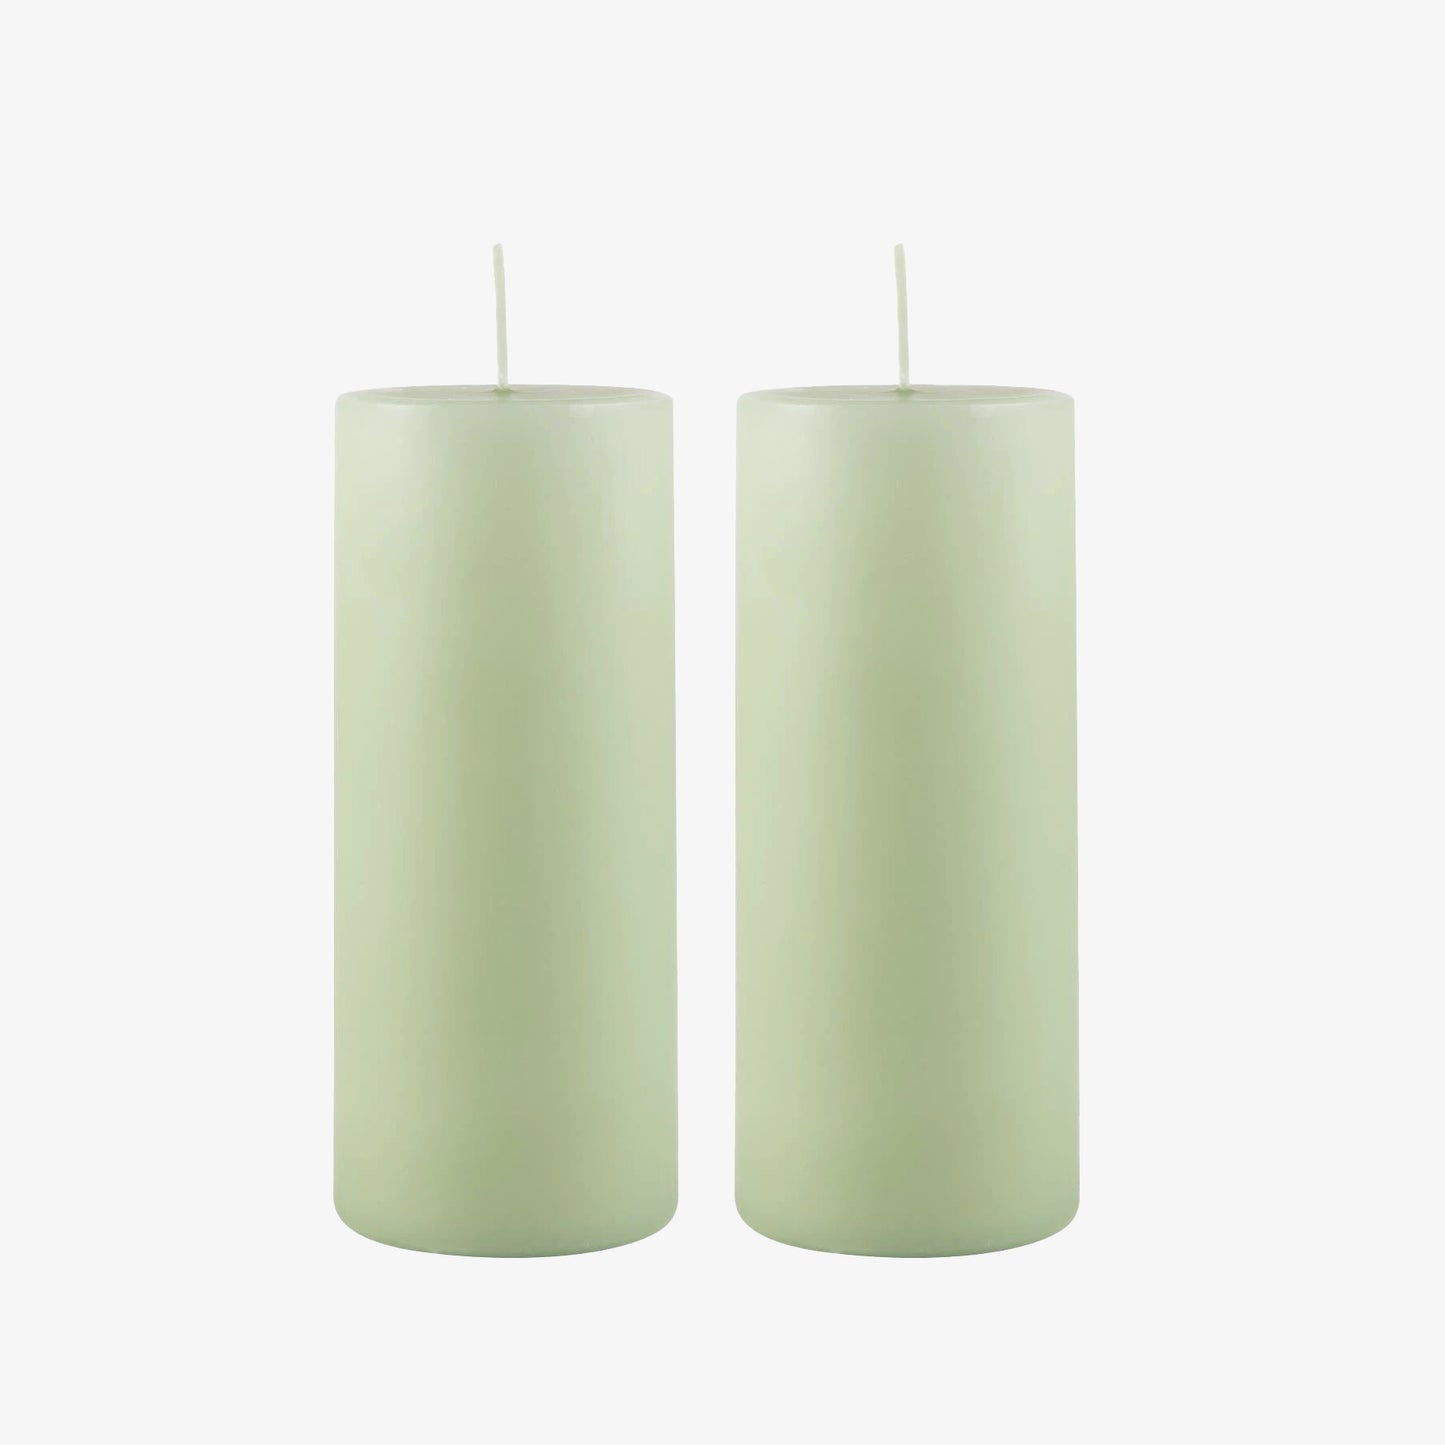 Ib Laursen Tall Pillar Candle (15cm) - Pack of 2